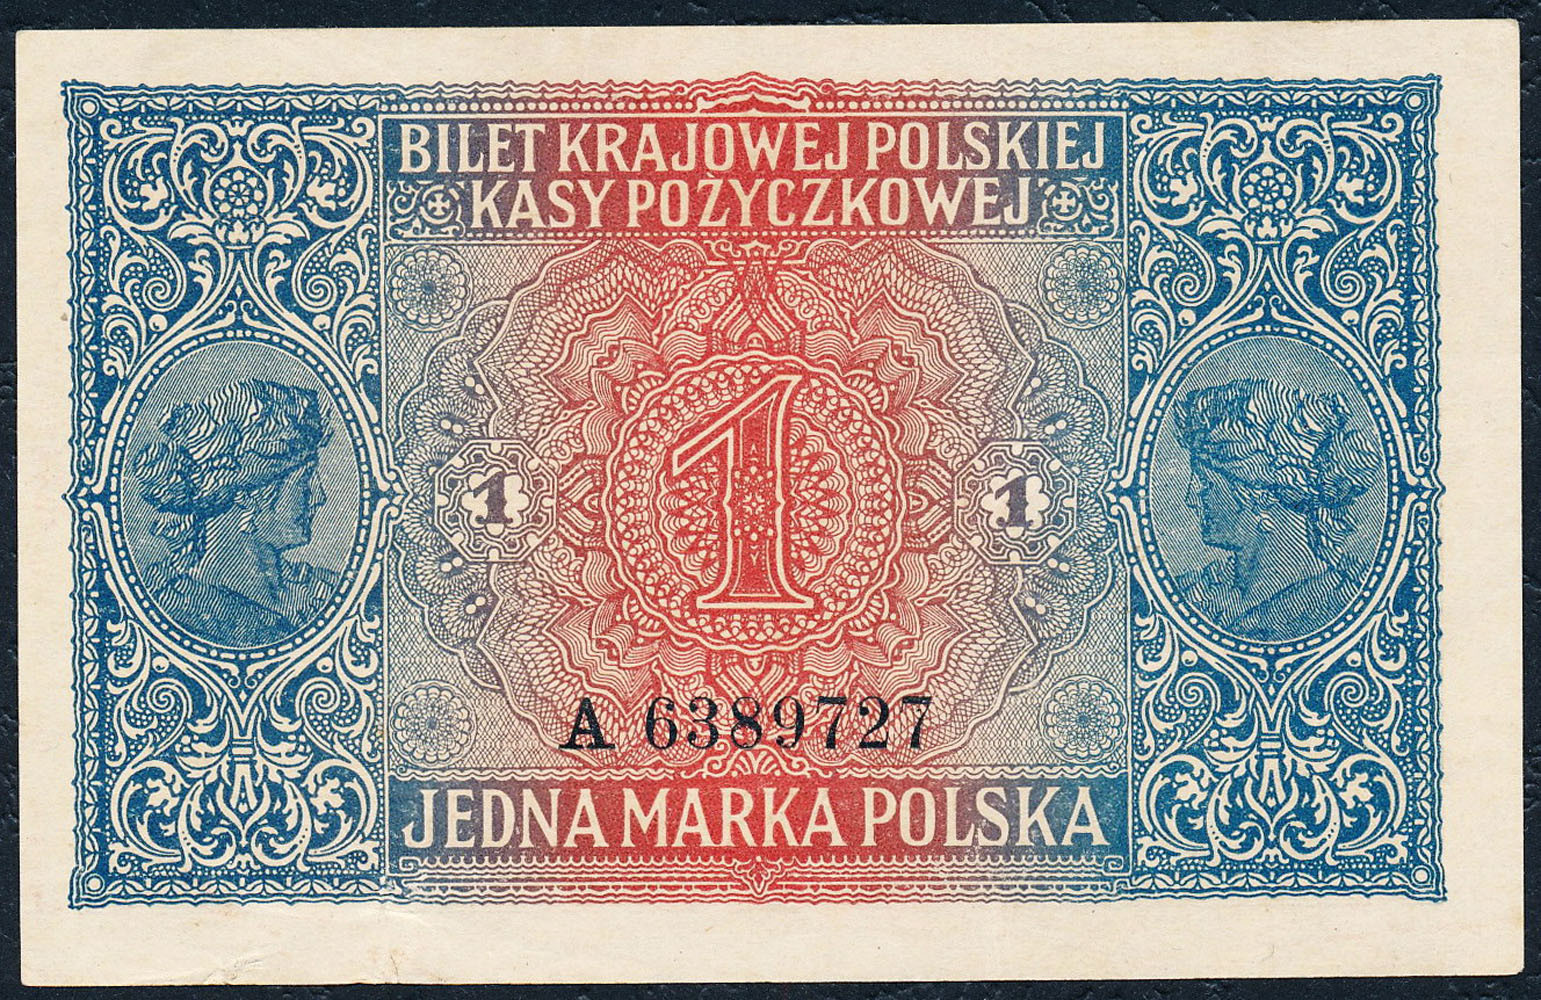 1 marka polska 1916 seria A - JENERAŁ